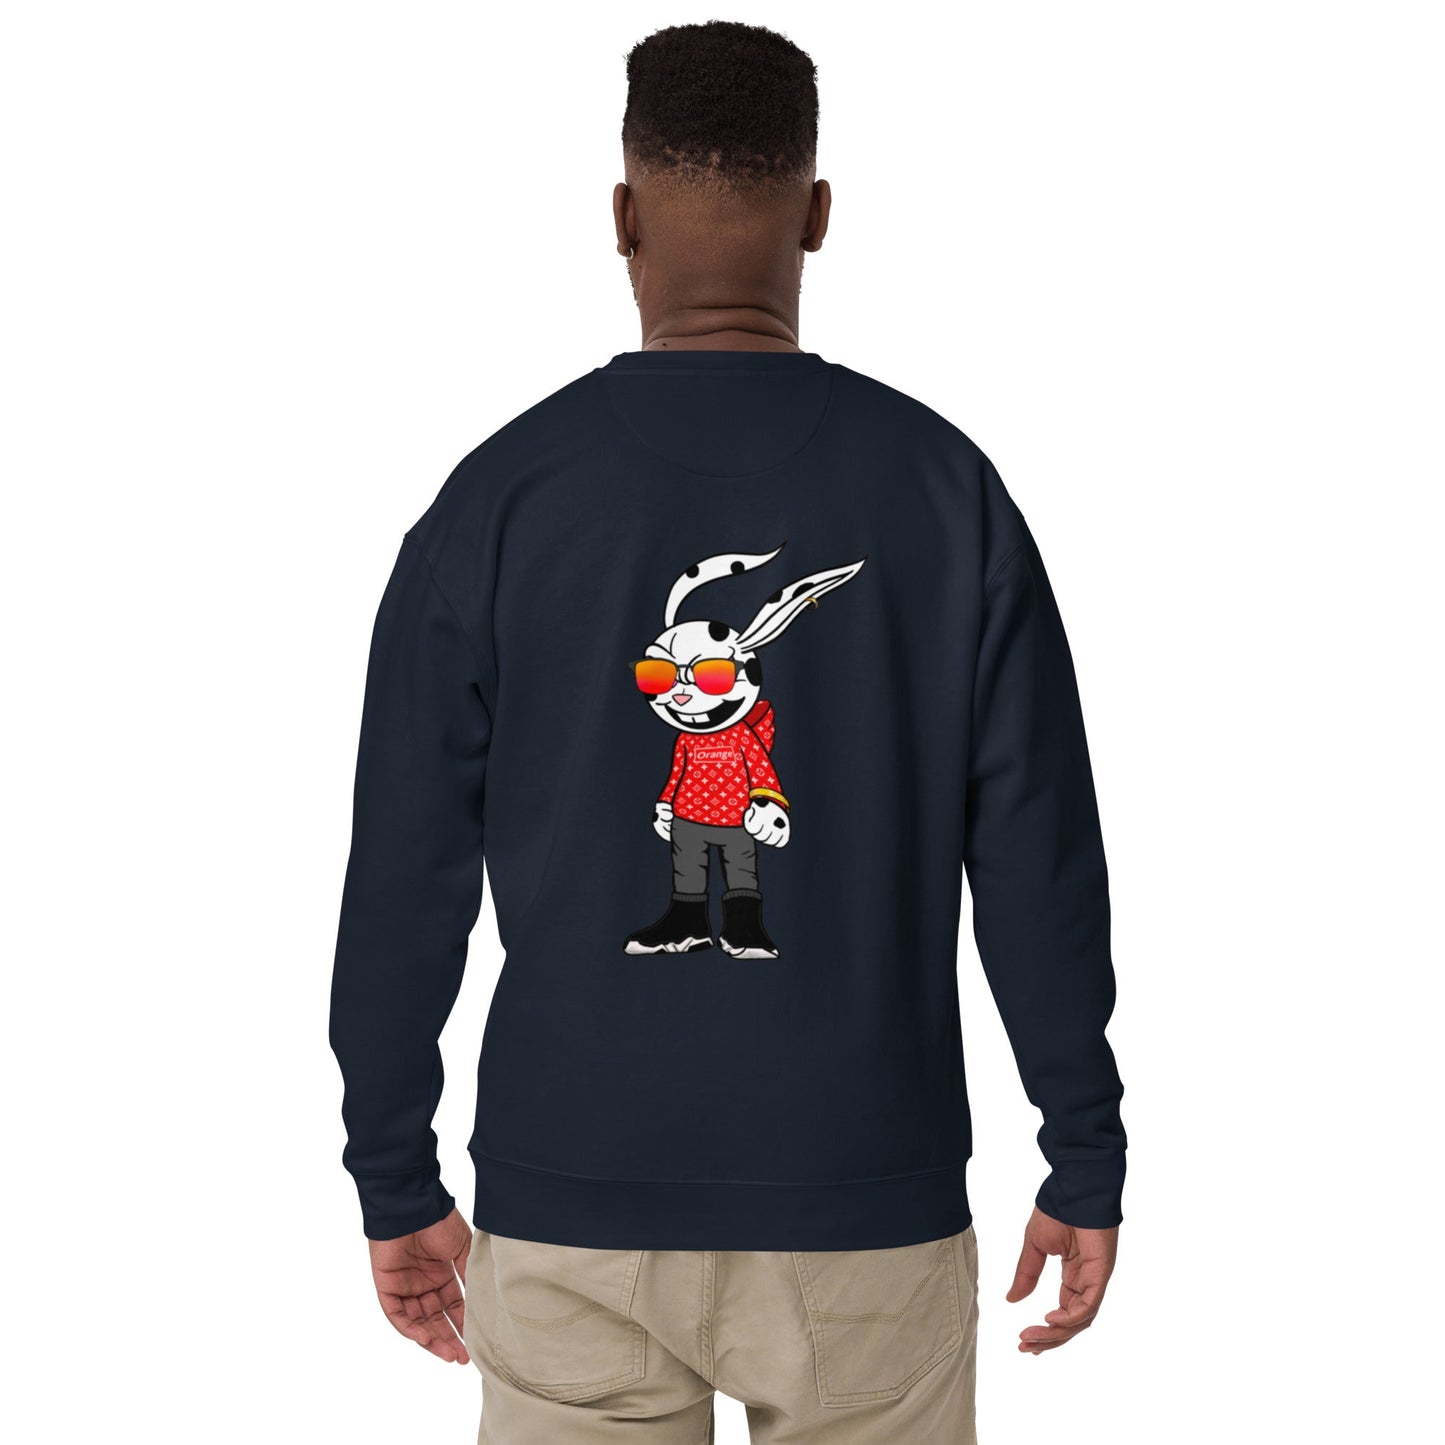 DOTS Style 3 Sweatshirt